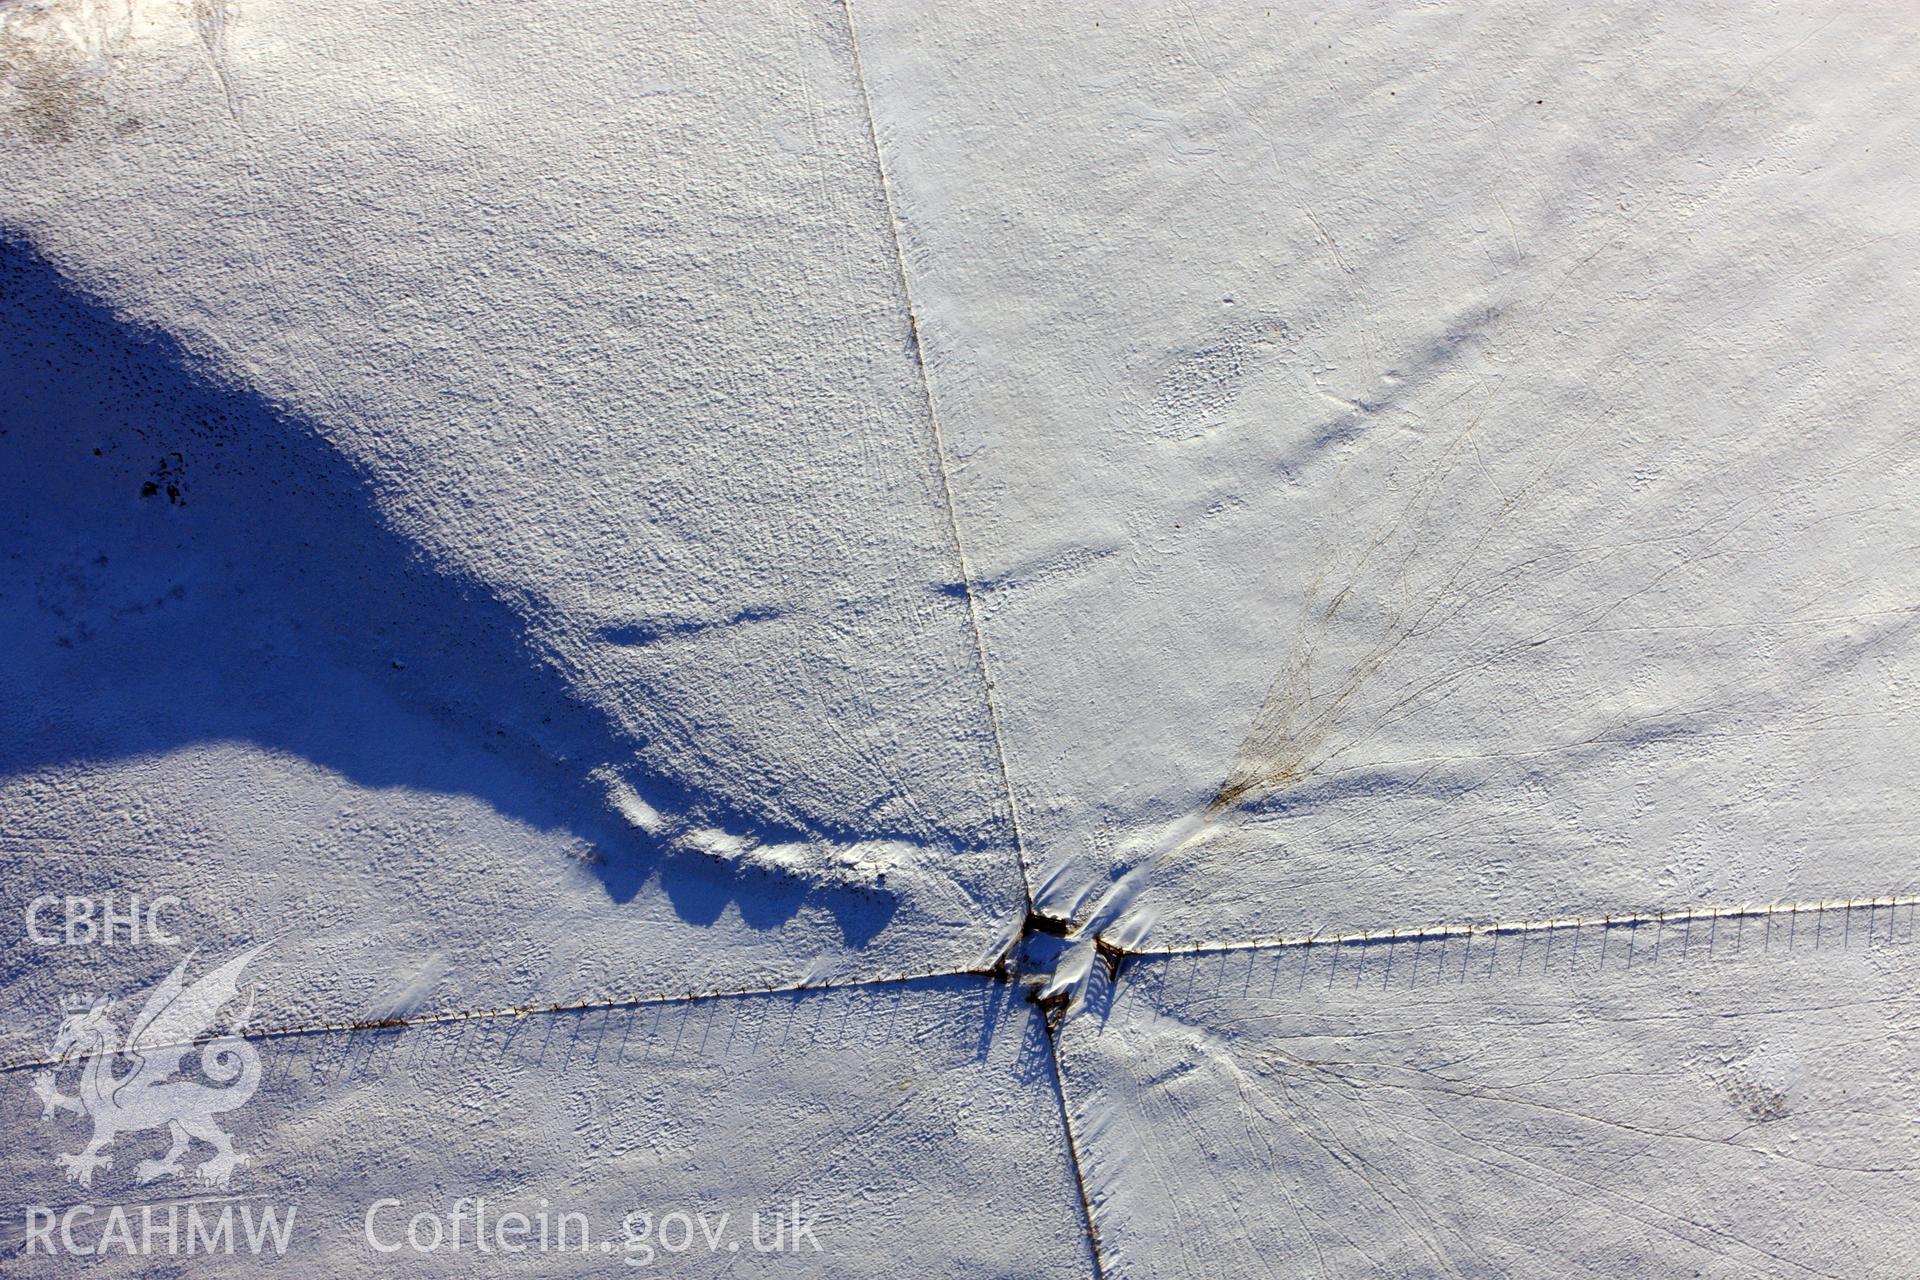 RCAHMW colour oblique aerial photograph of Banc Du Neolithic causewayed enclosure under snow, by Toby Driver, 01/12/2010.